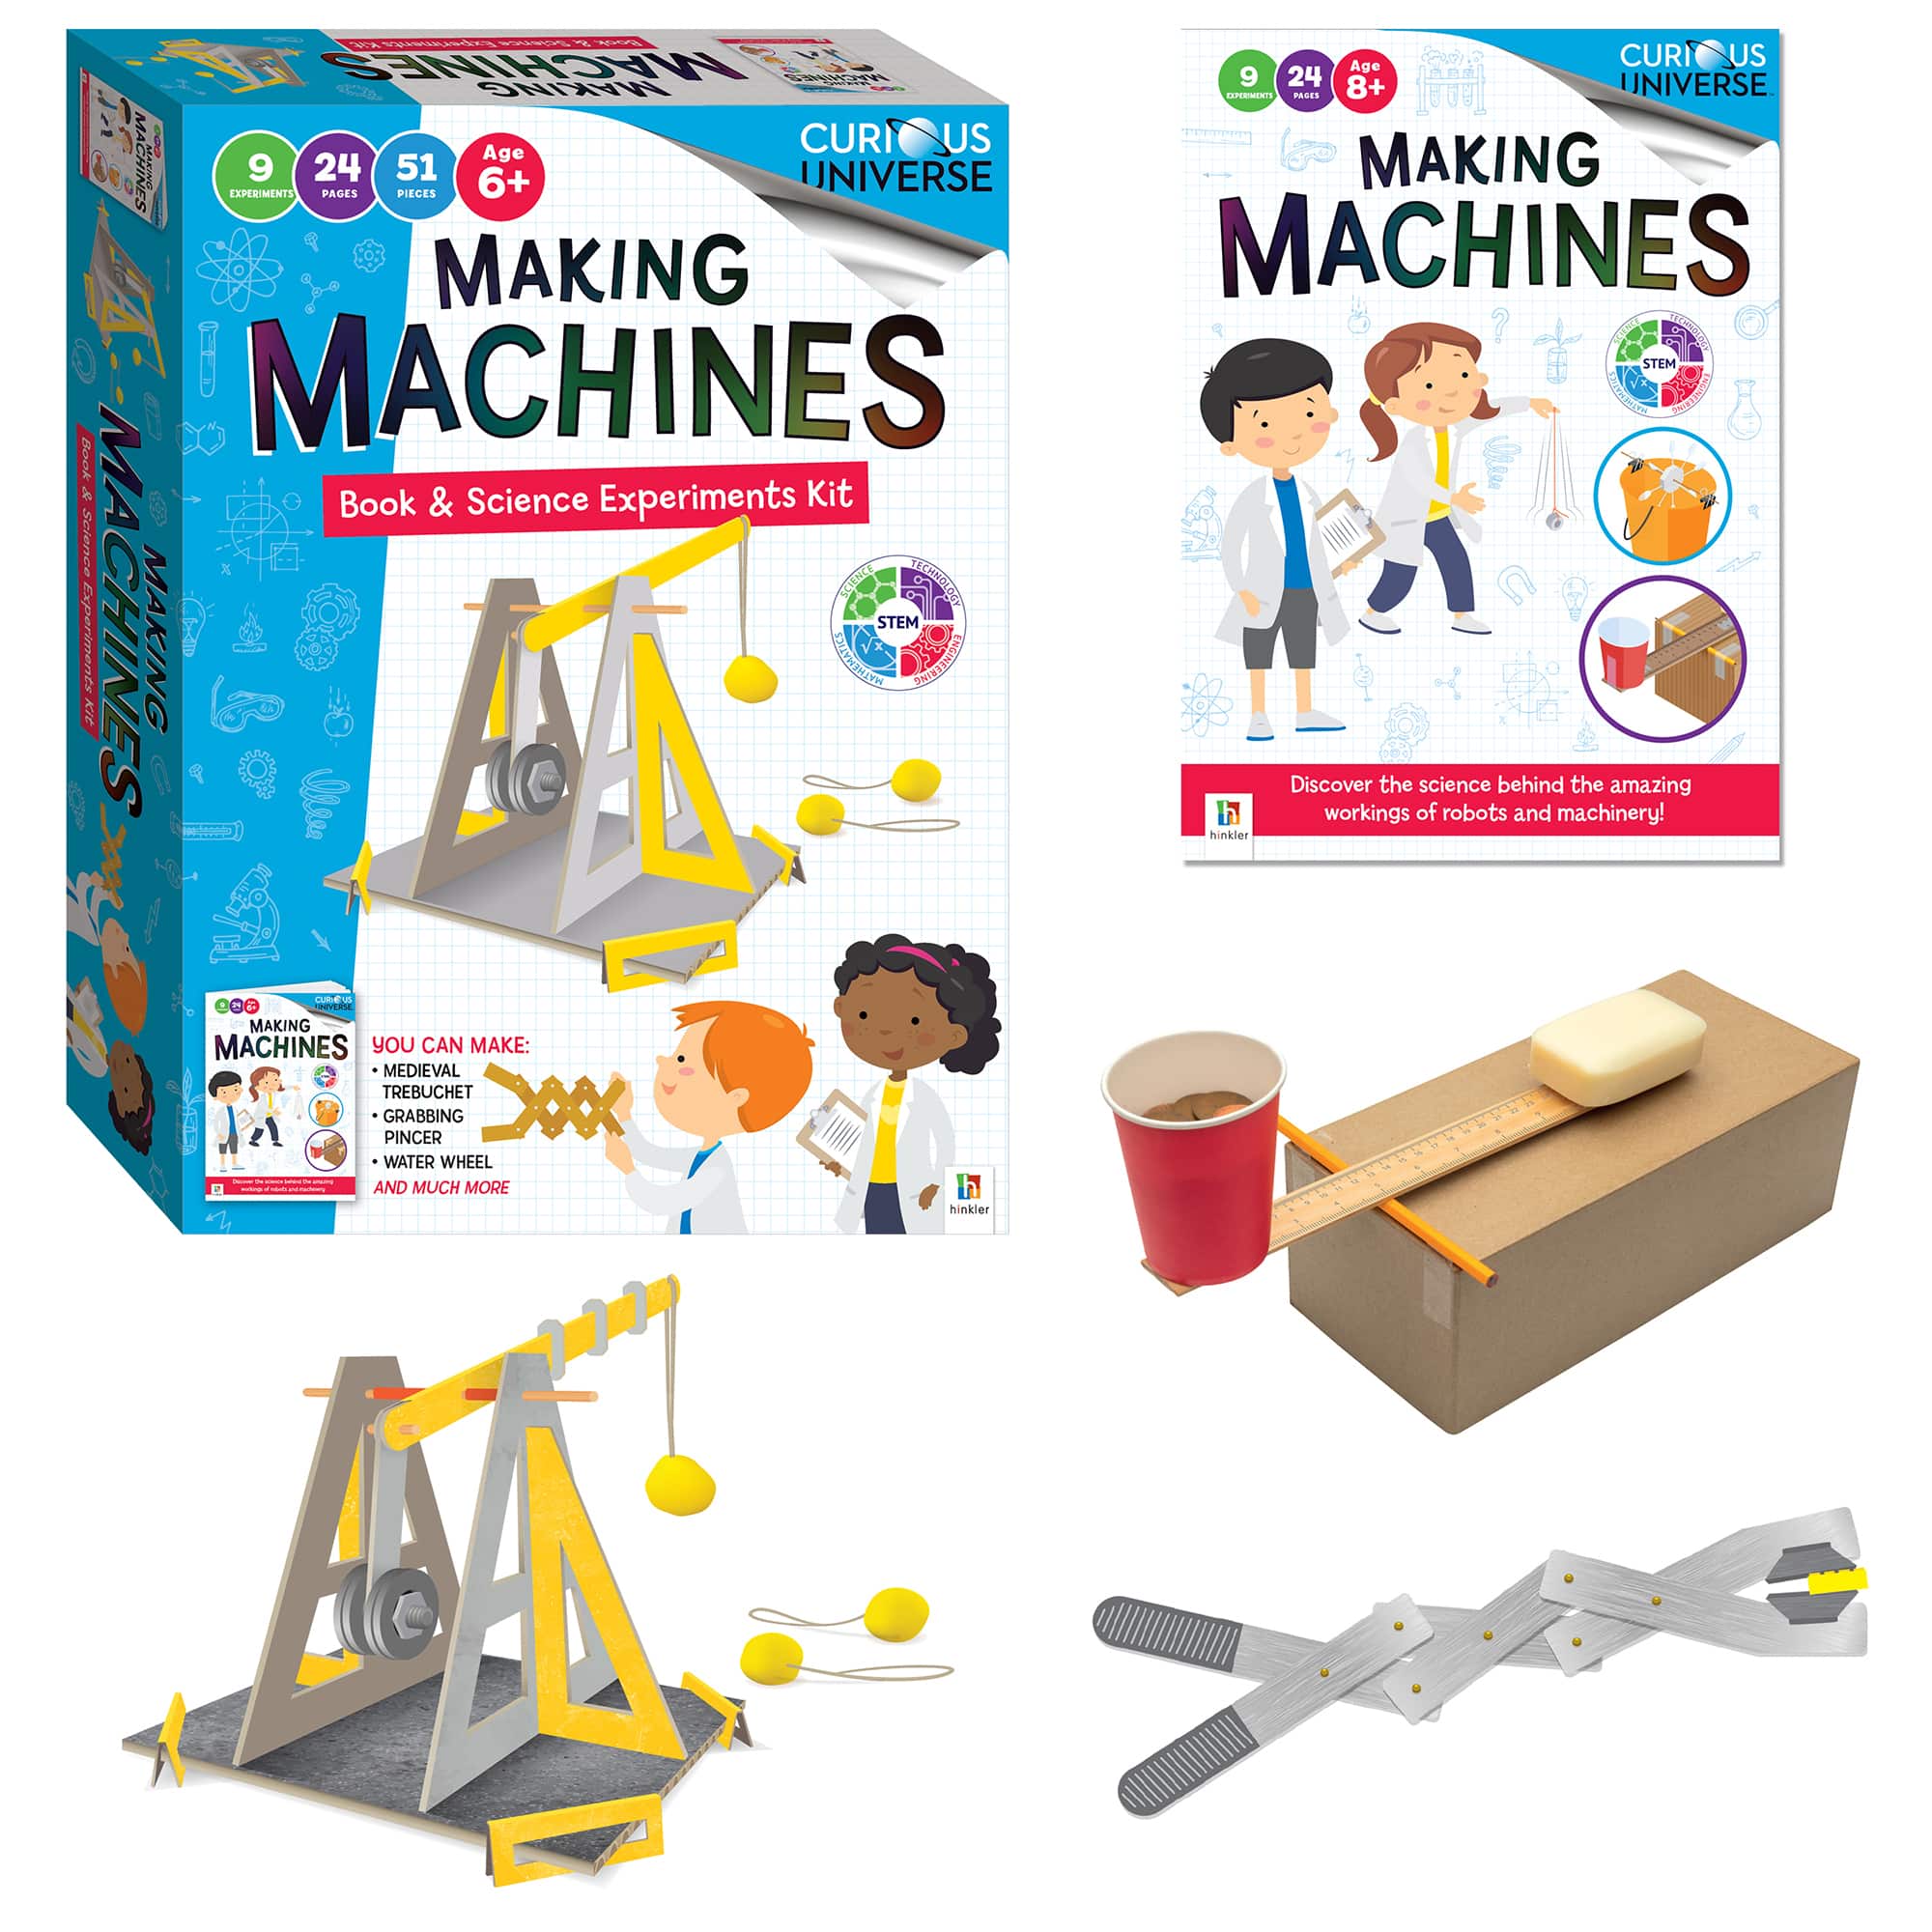 Hinkler Curious Universe&#x2122; Making Machines Science Kit